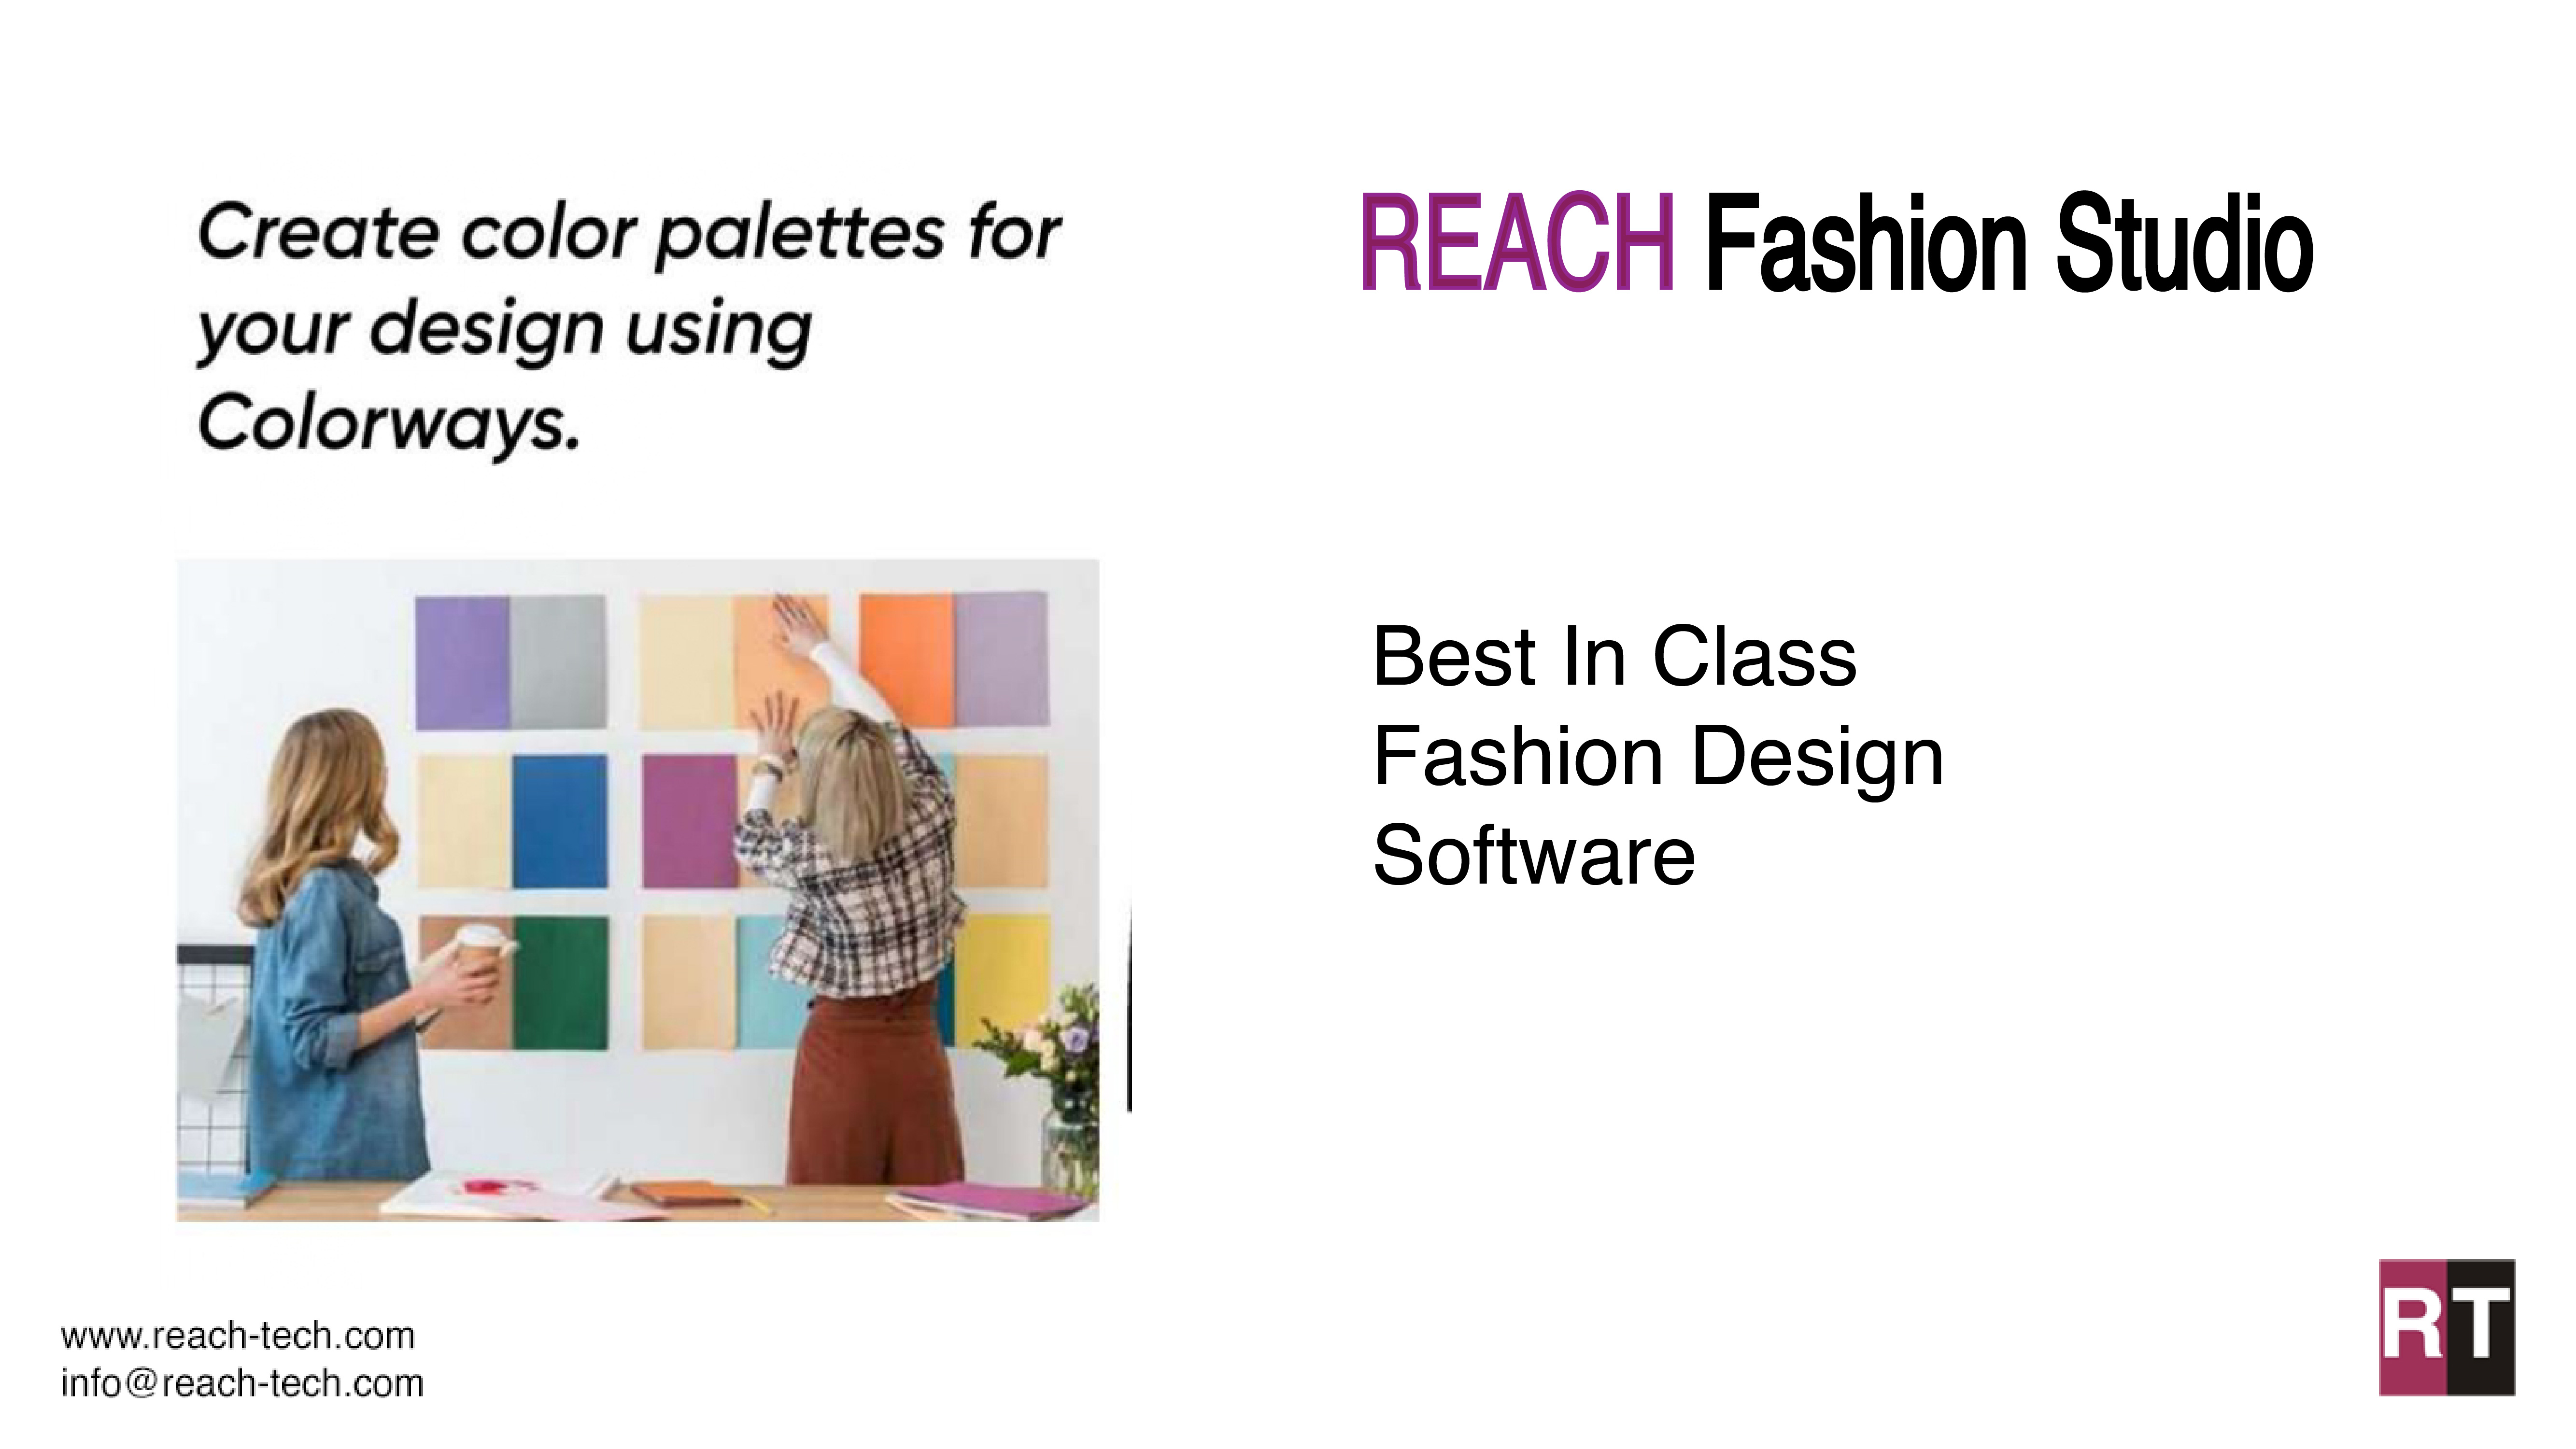 Reach Fashion Studio poster Image 07